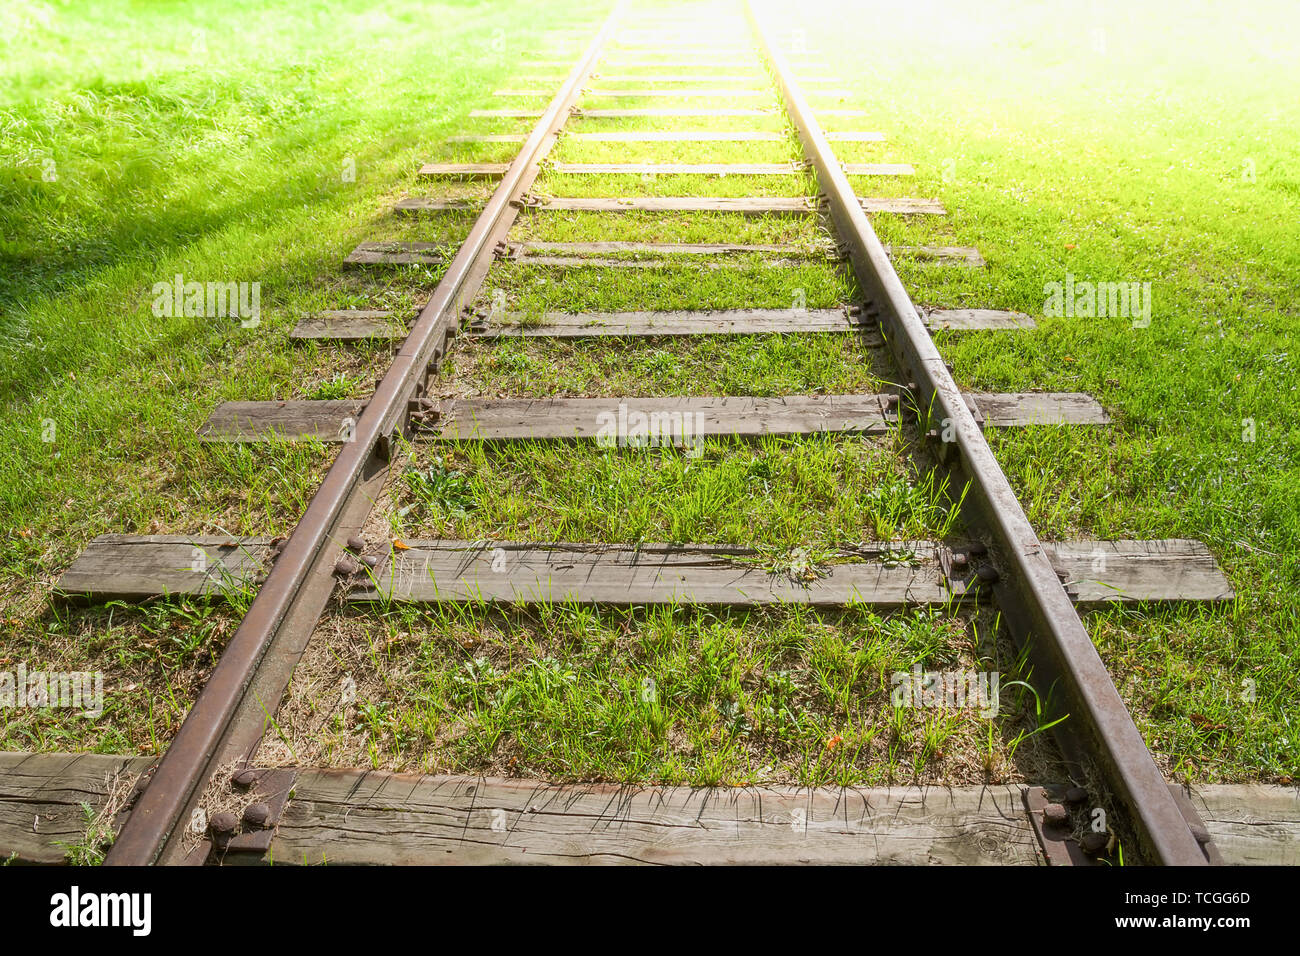 Railway track tending far away to infinity. Stock Photo